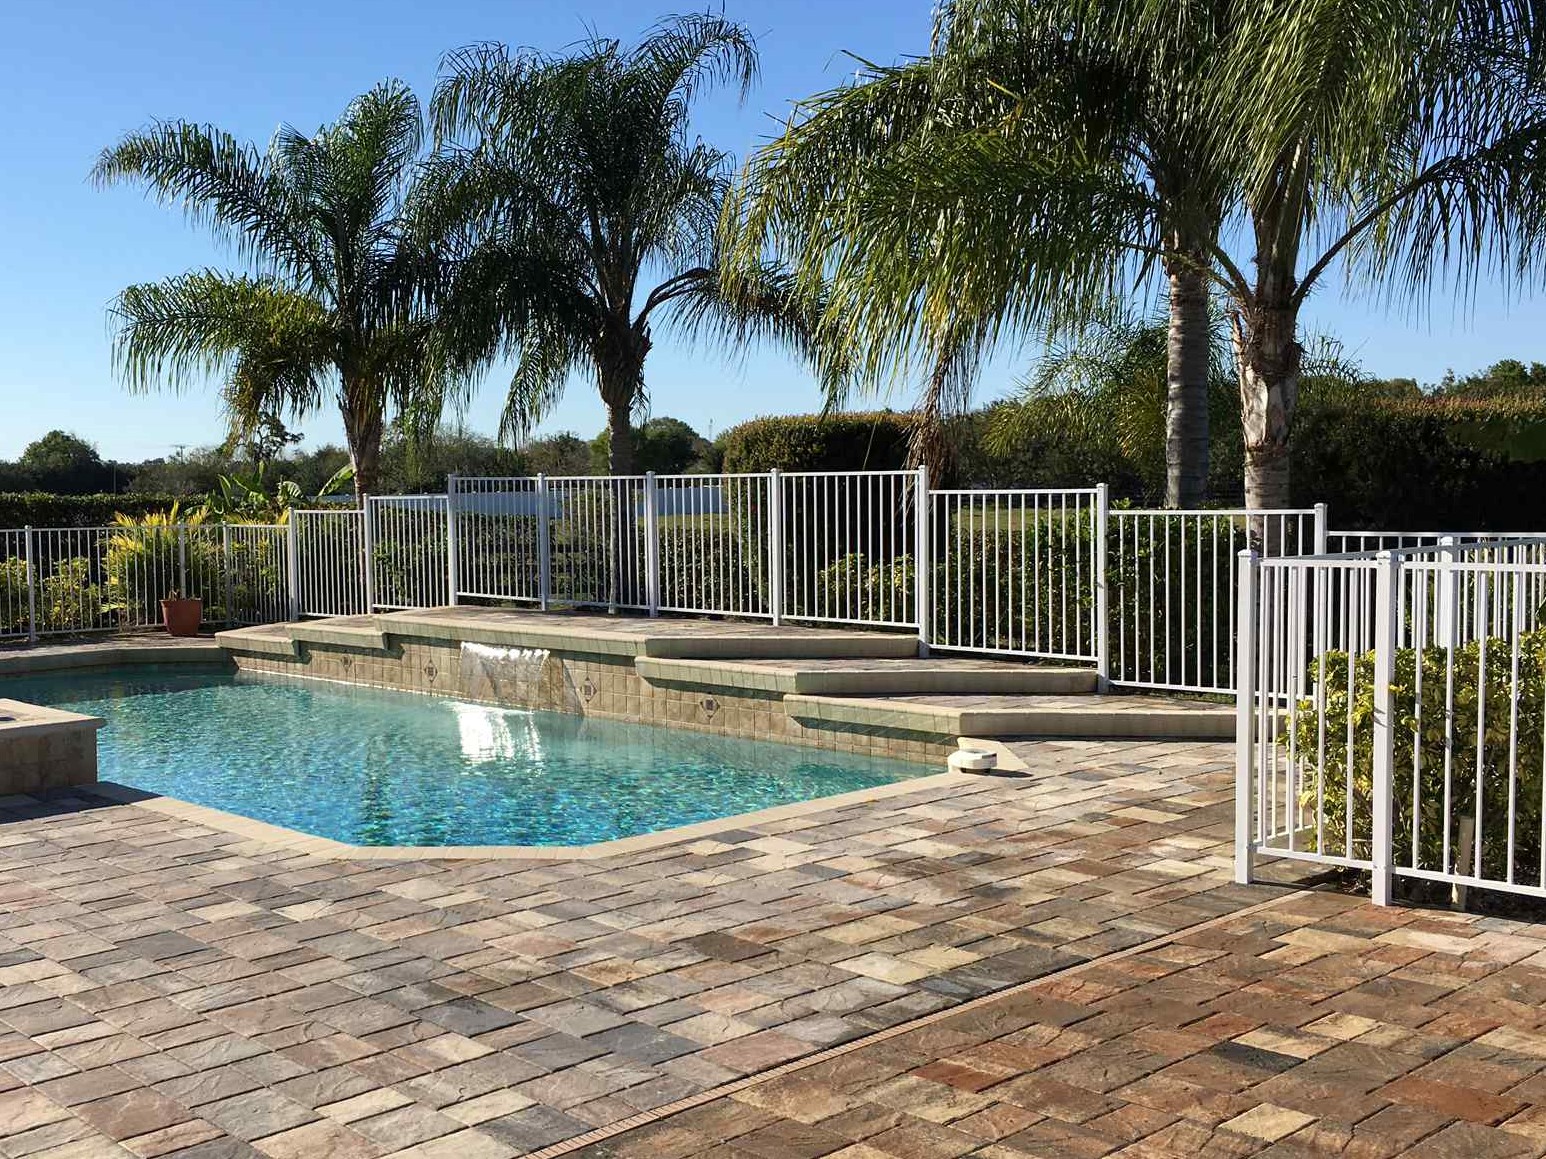 Photo of an aluminum Florida pool fence in Sarasota